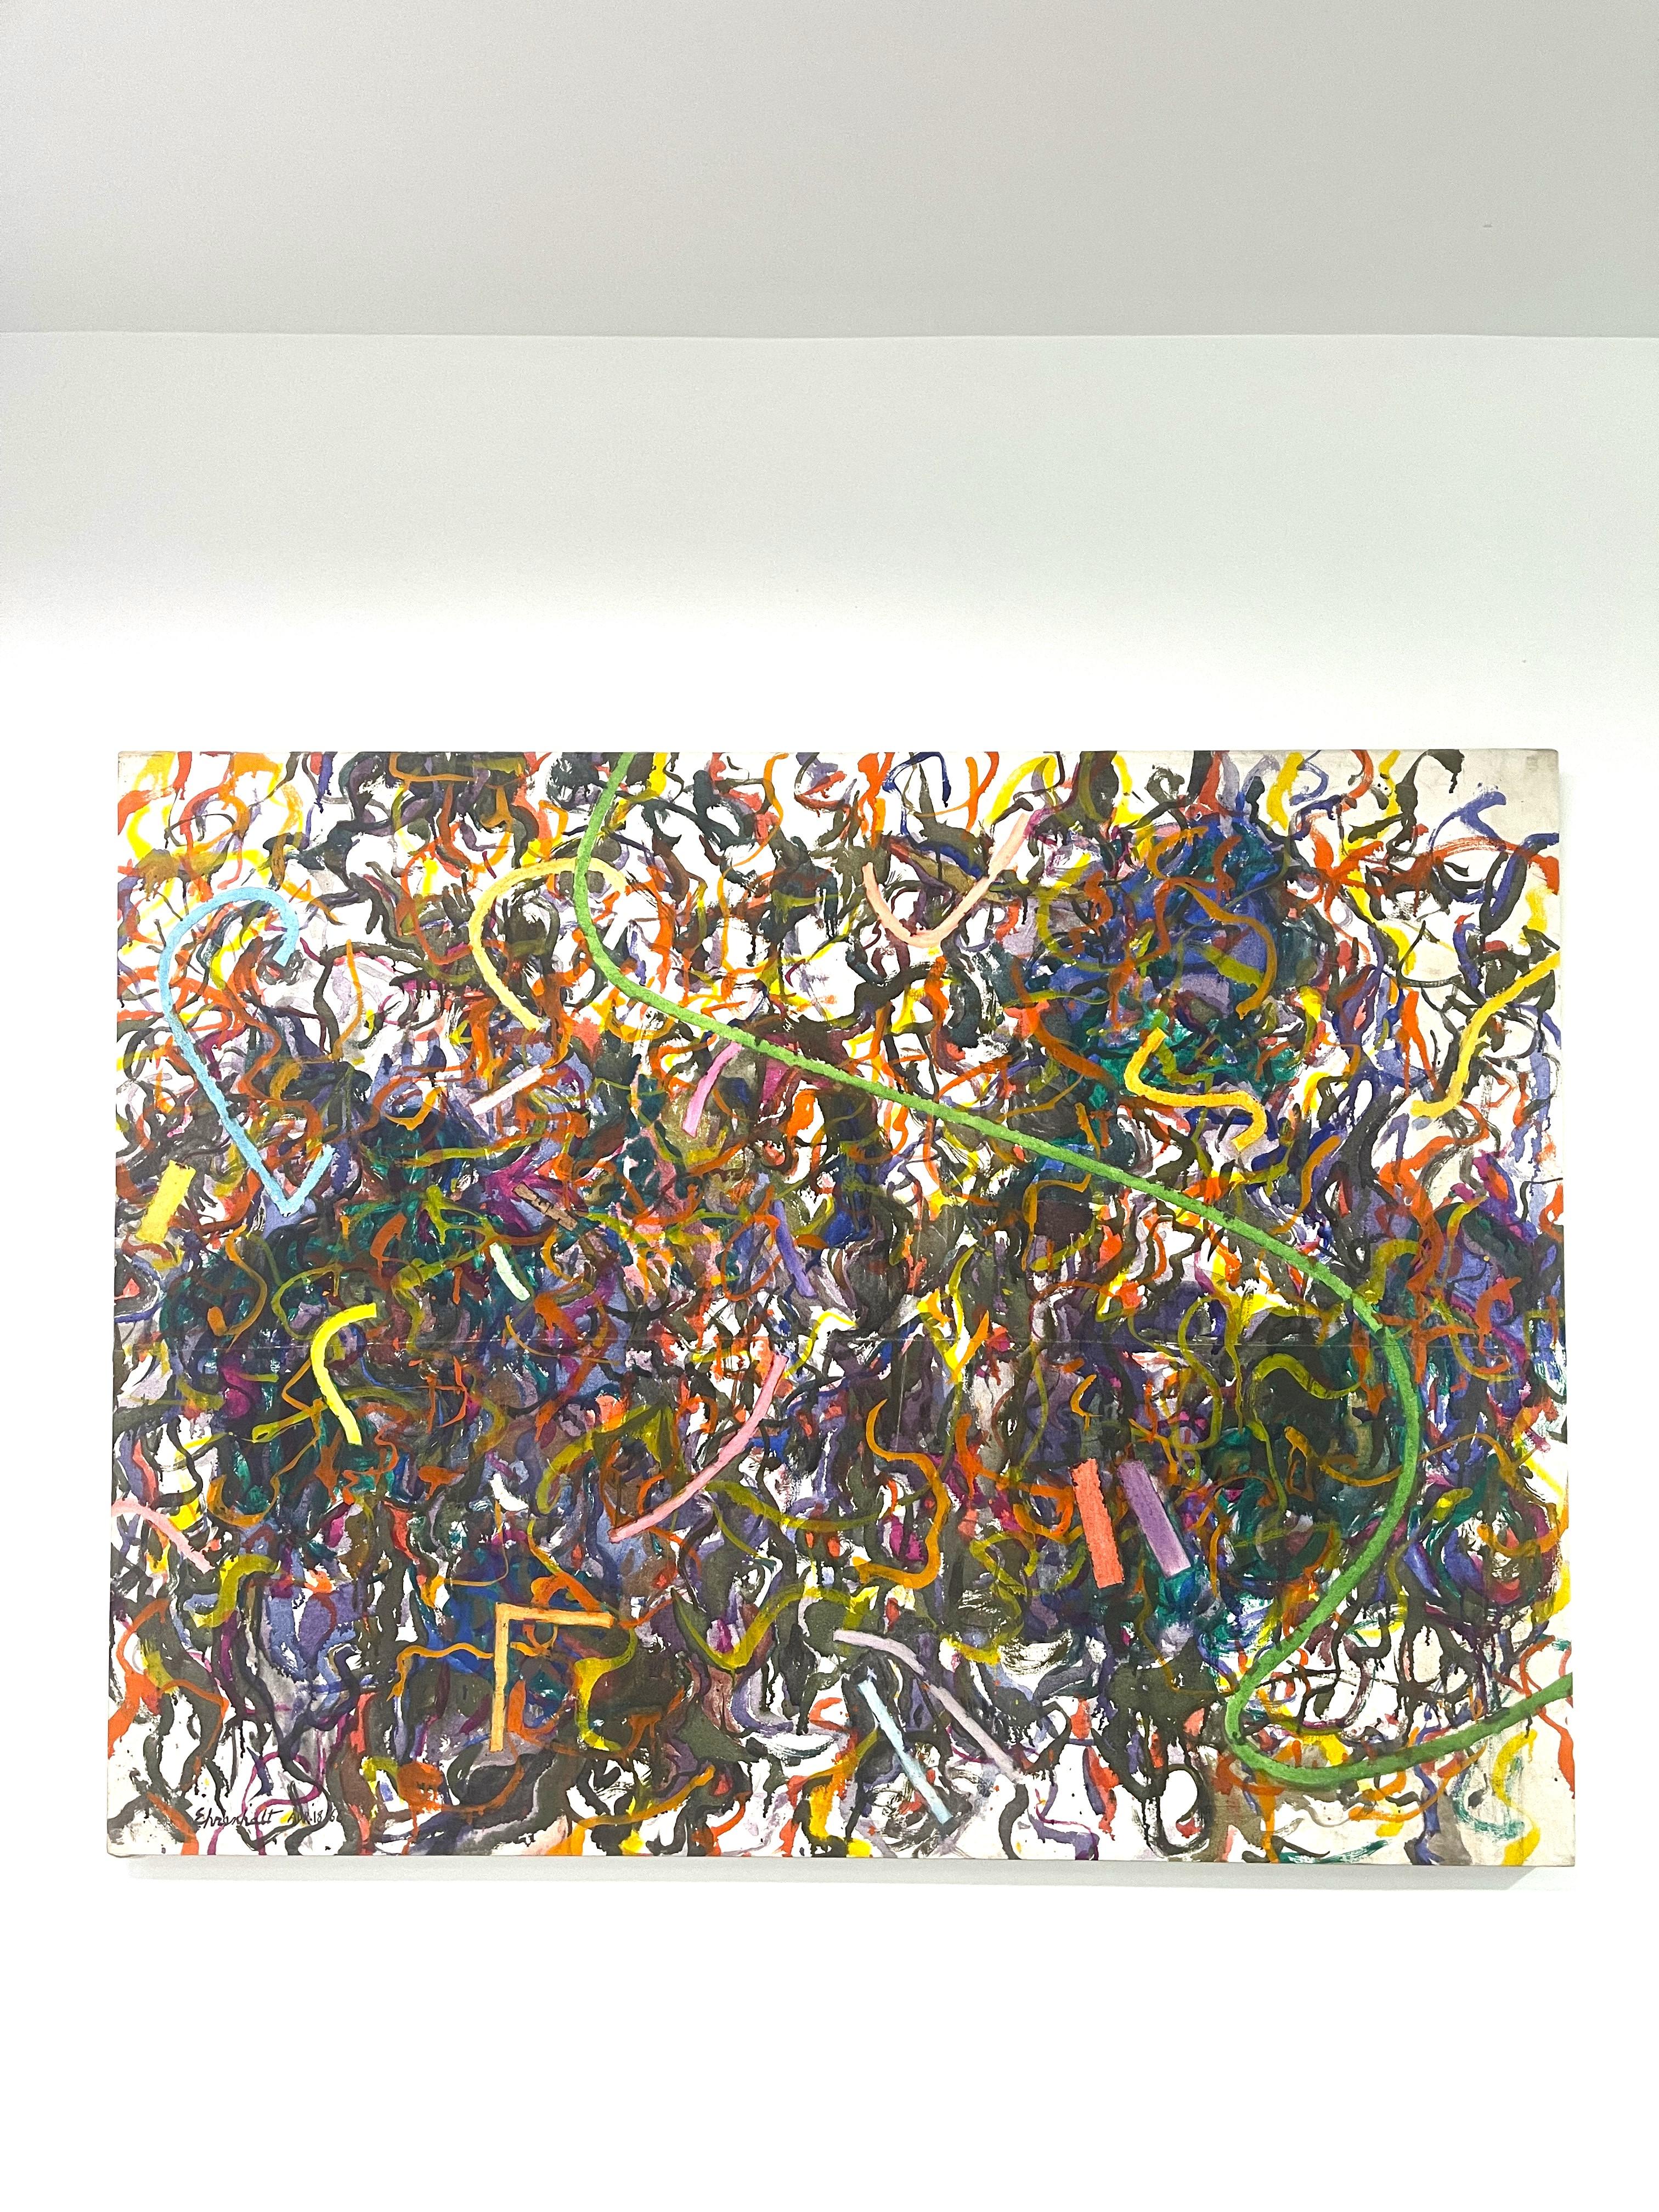 Spaghetti Western - Abstract Expressionist Painting by Amaranth Ehrenhalt